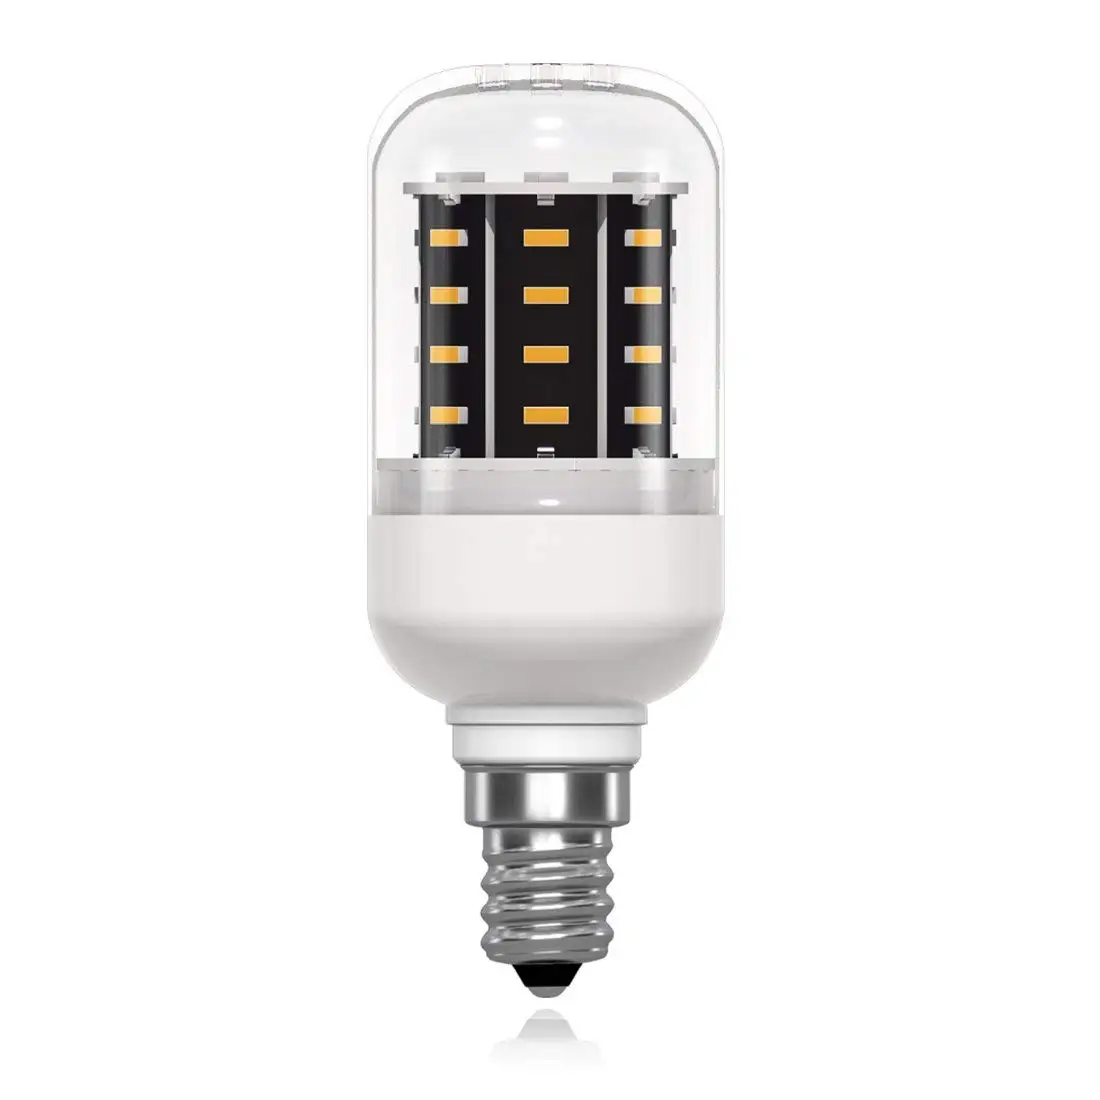 zwankdesign: Microwave Light Bulb Flashing